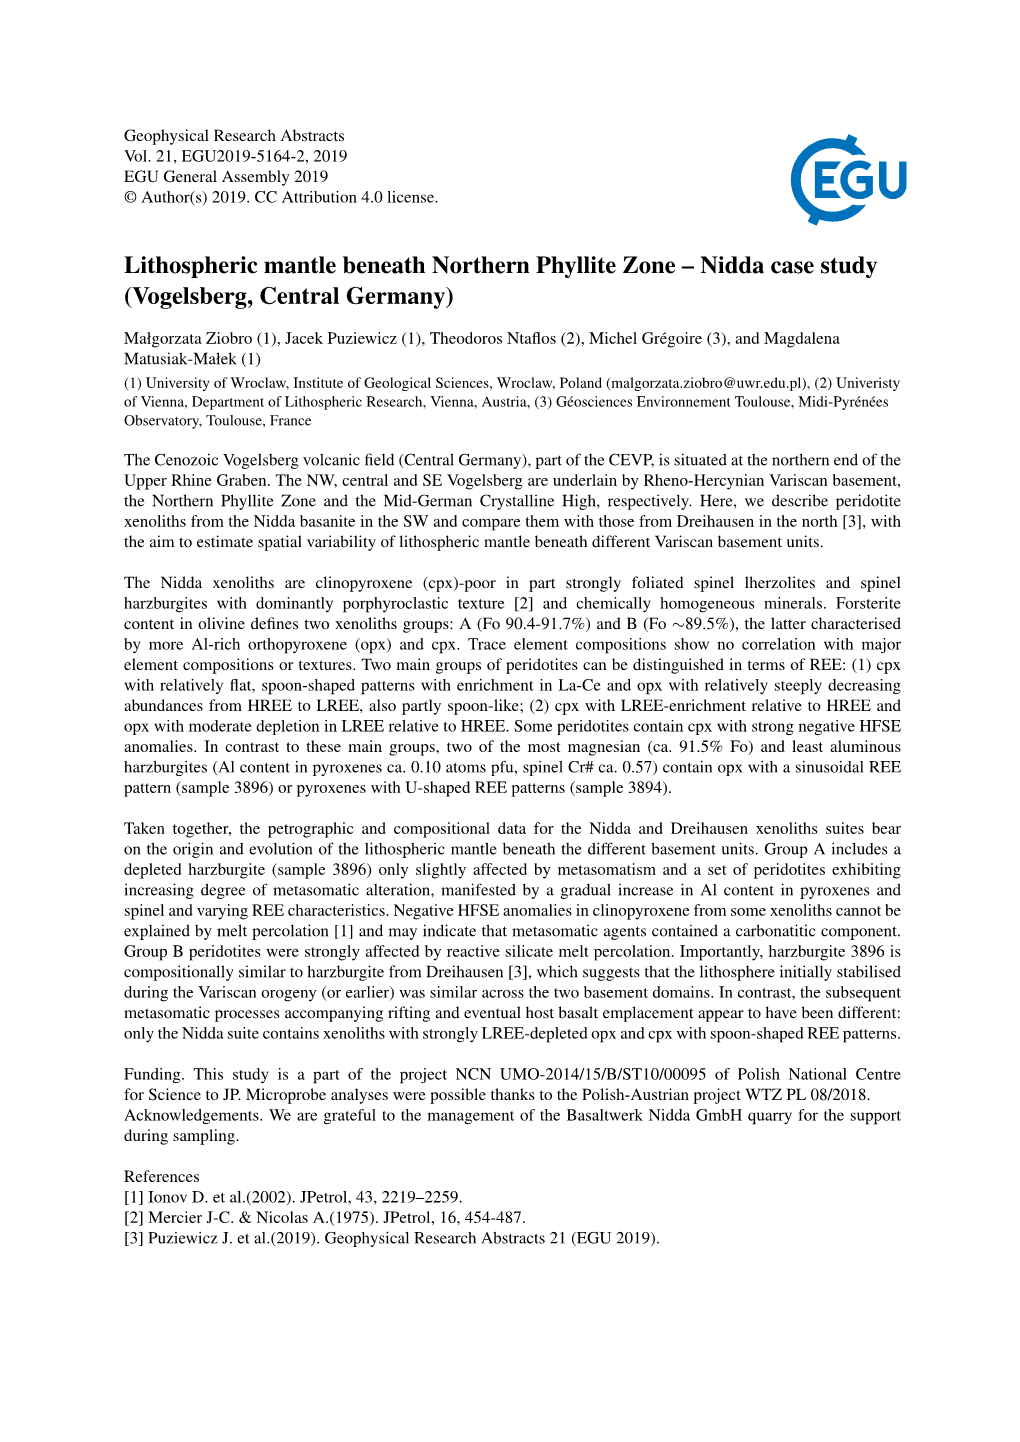 Lithospheric Mantle Beneath Northern Phyllite Zone – Nidda Case Study (Vogelsberg, Central Germany)